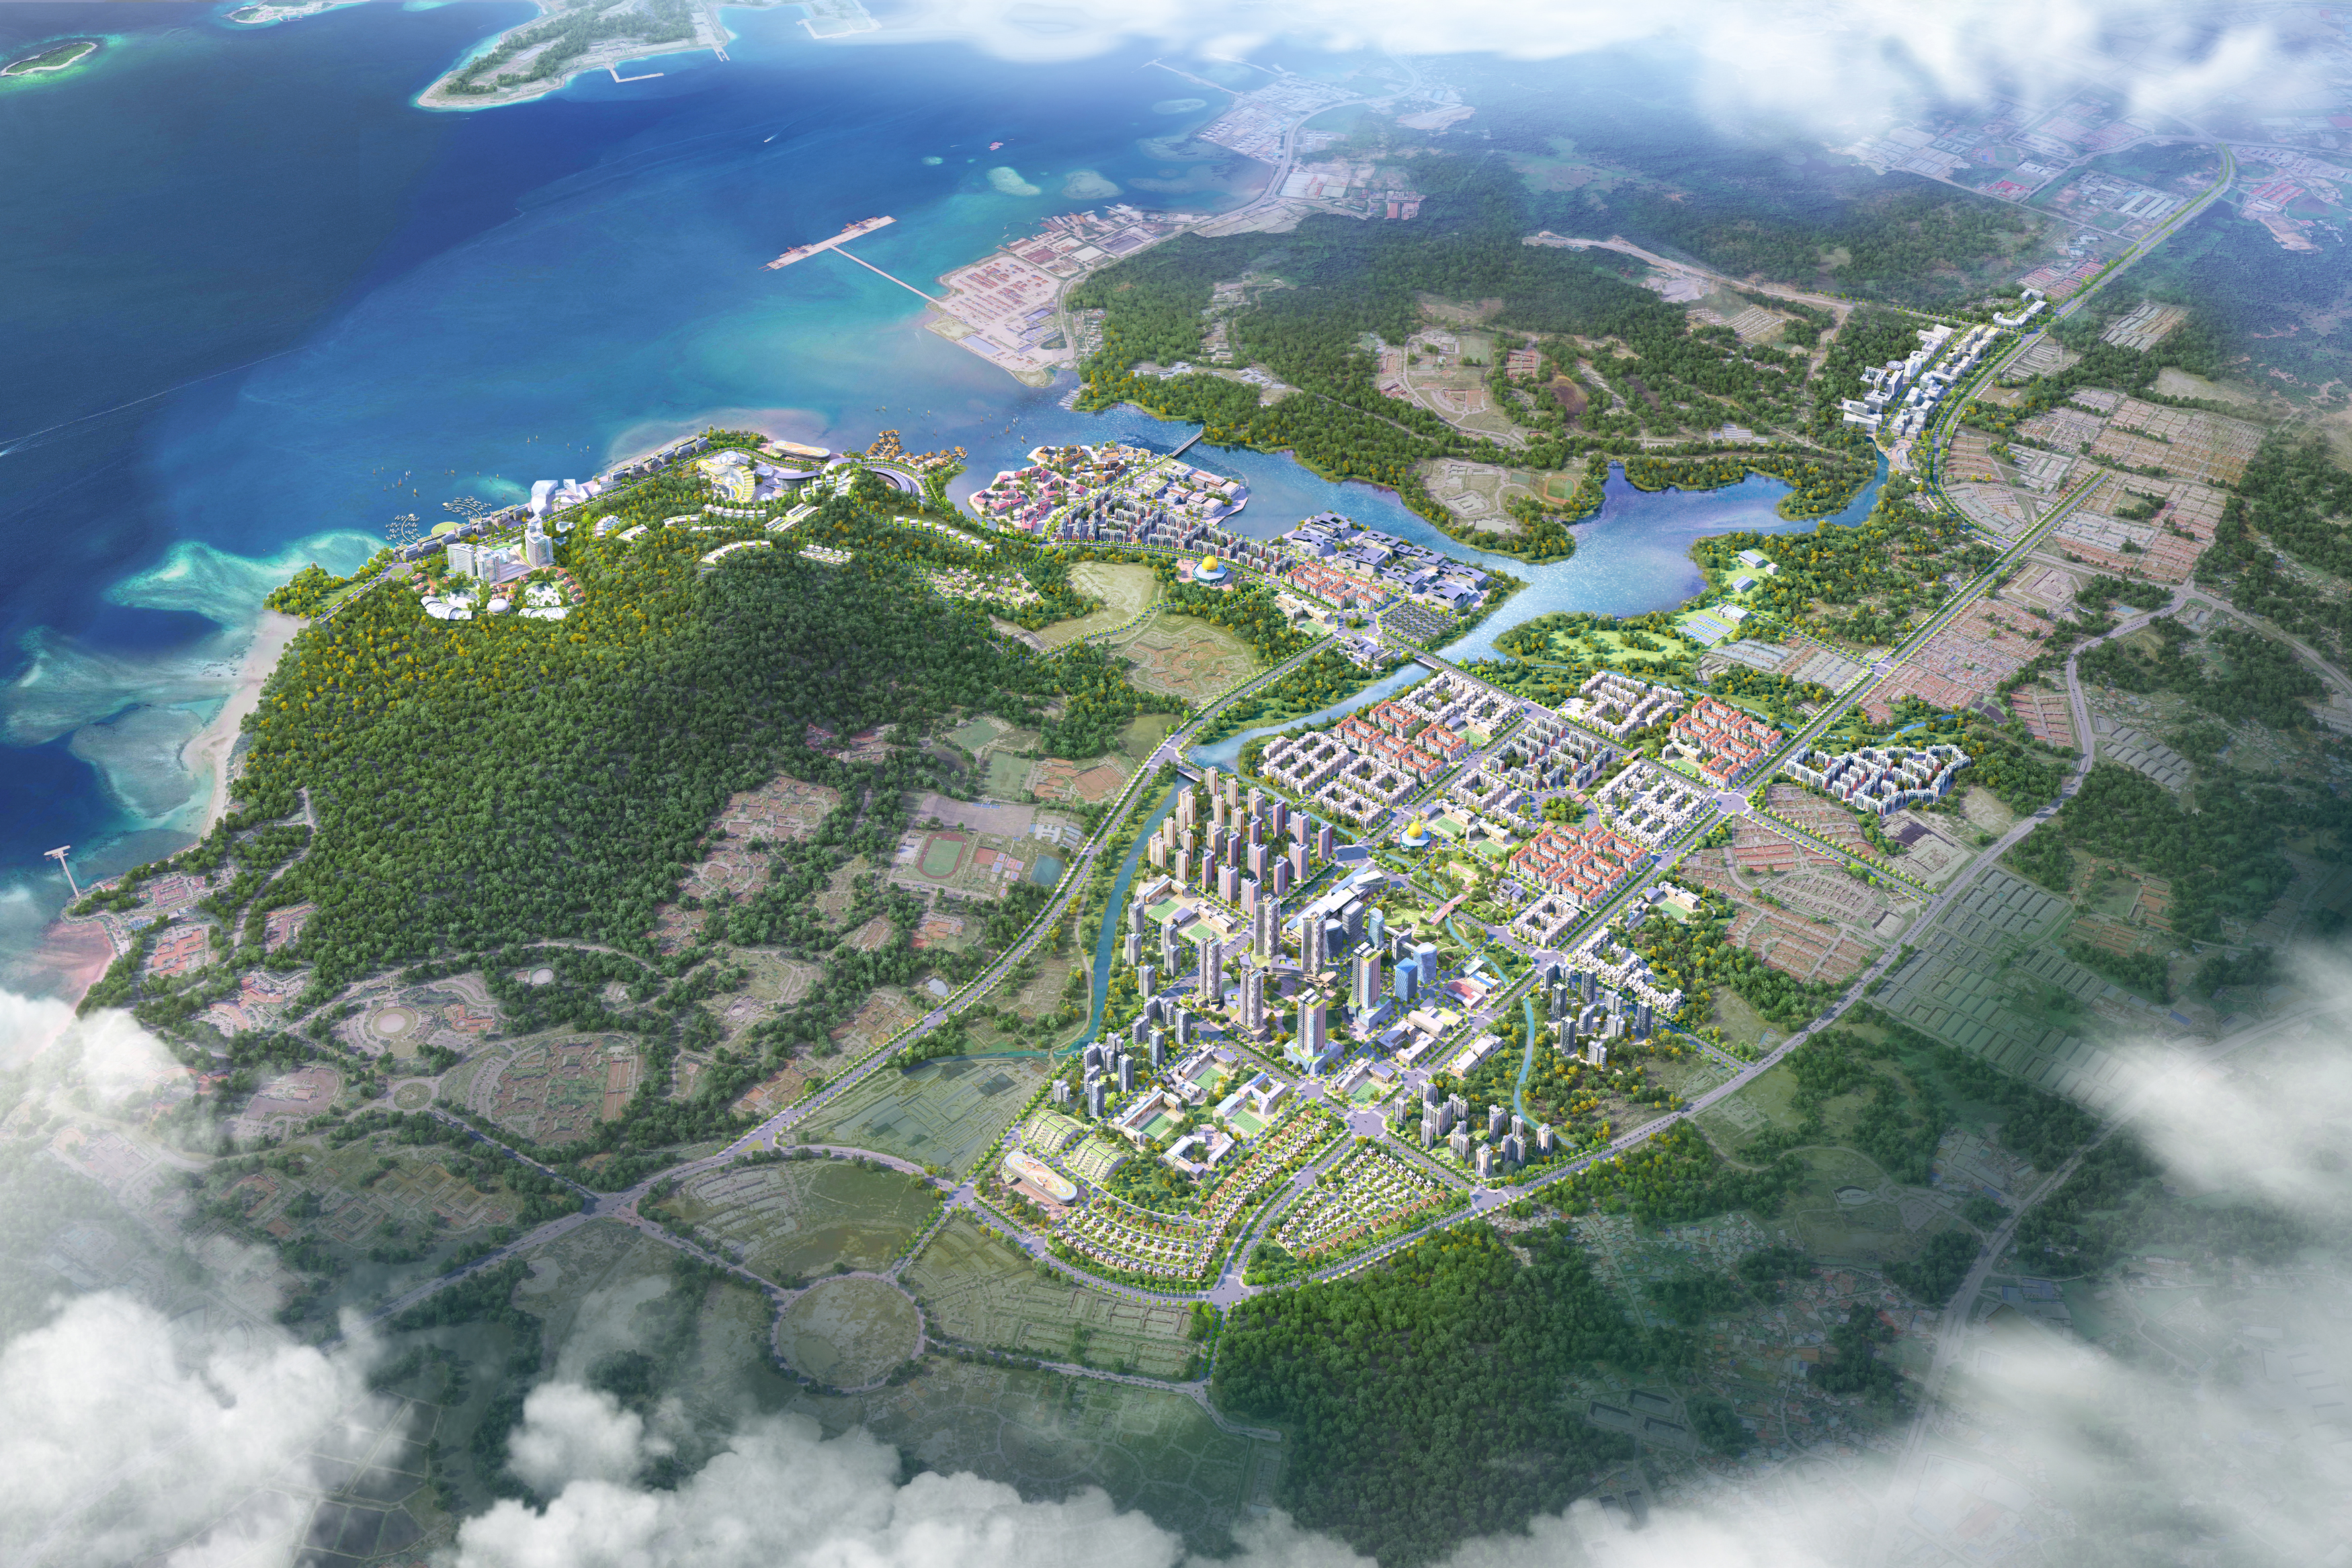 Feasibility Study for Development of Kota Kinabalu Smart City Project